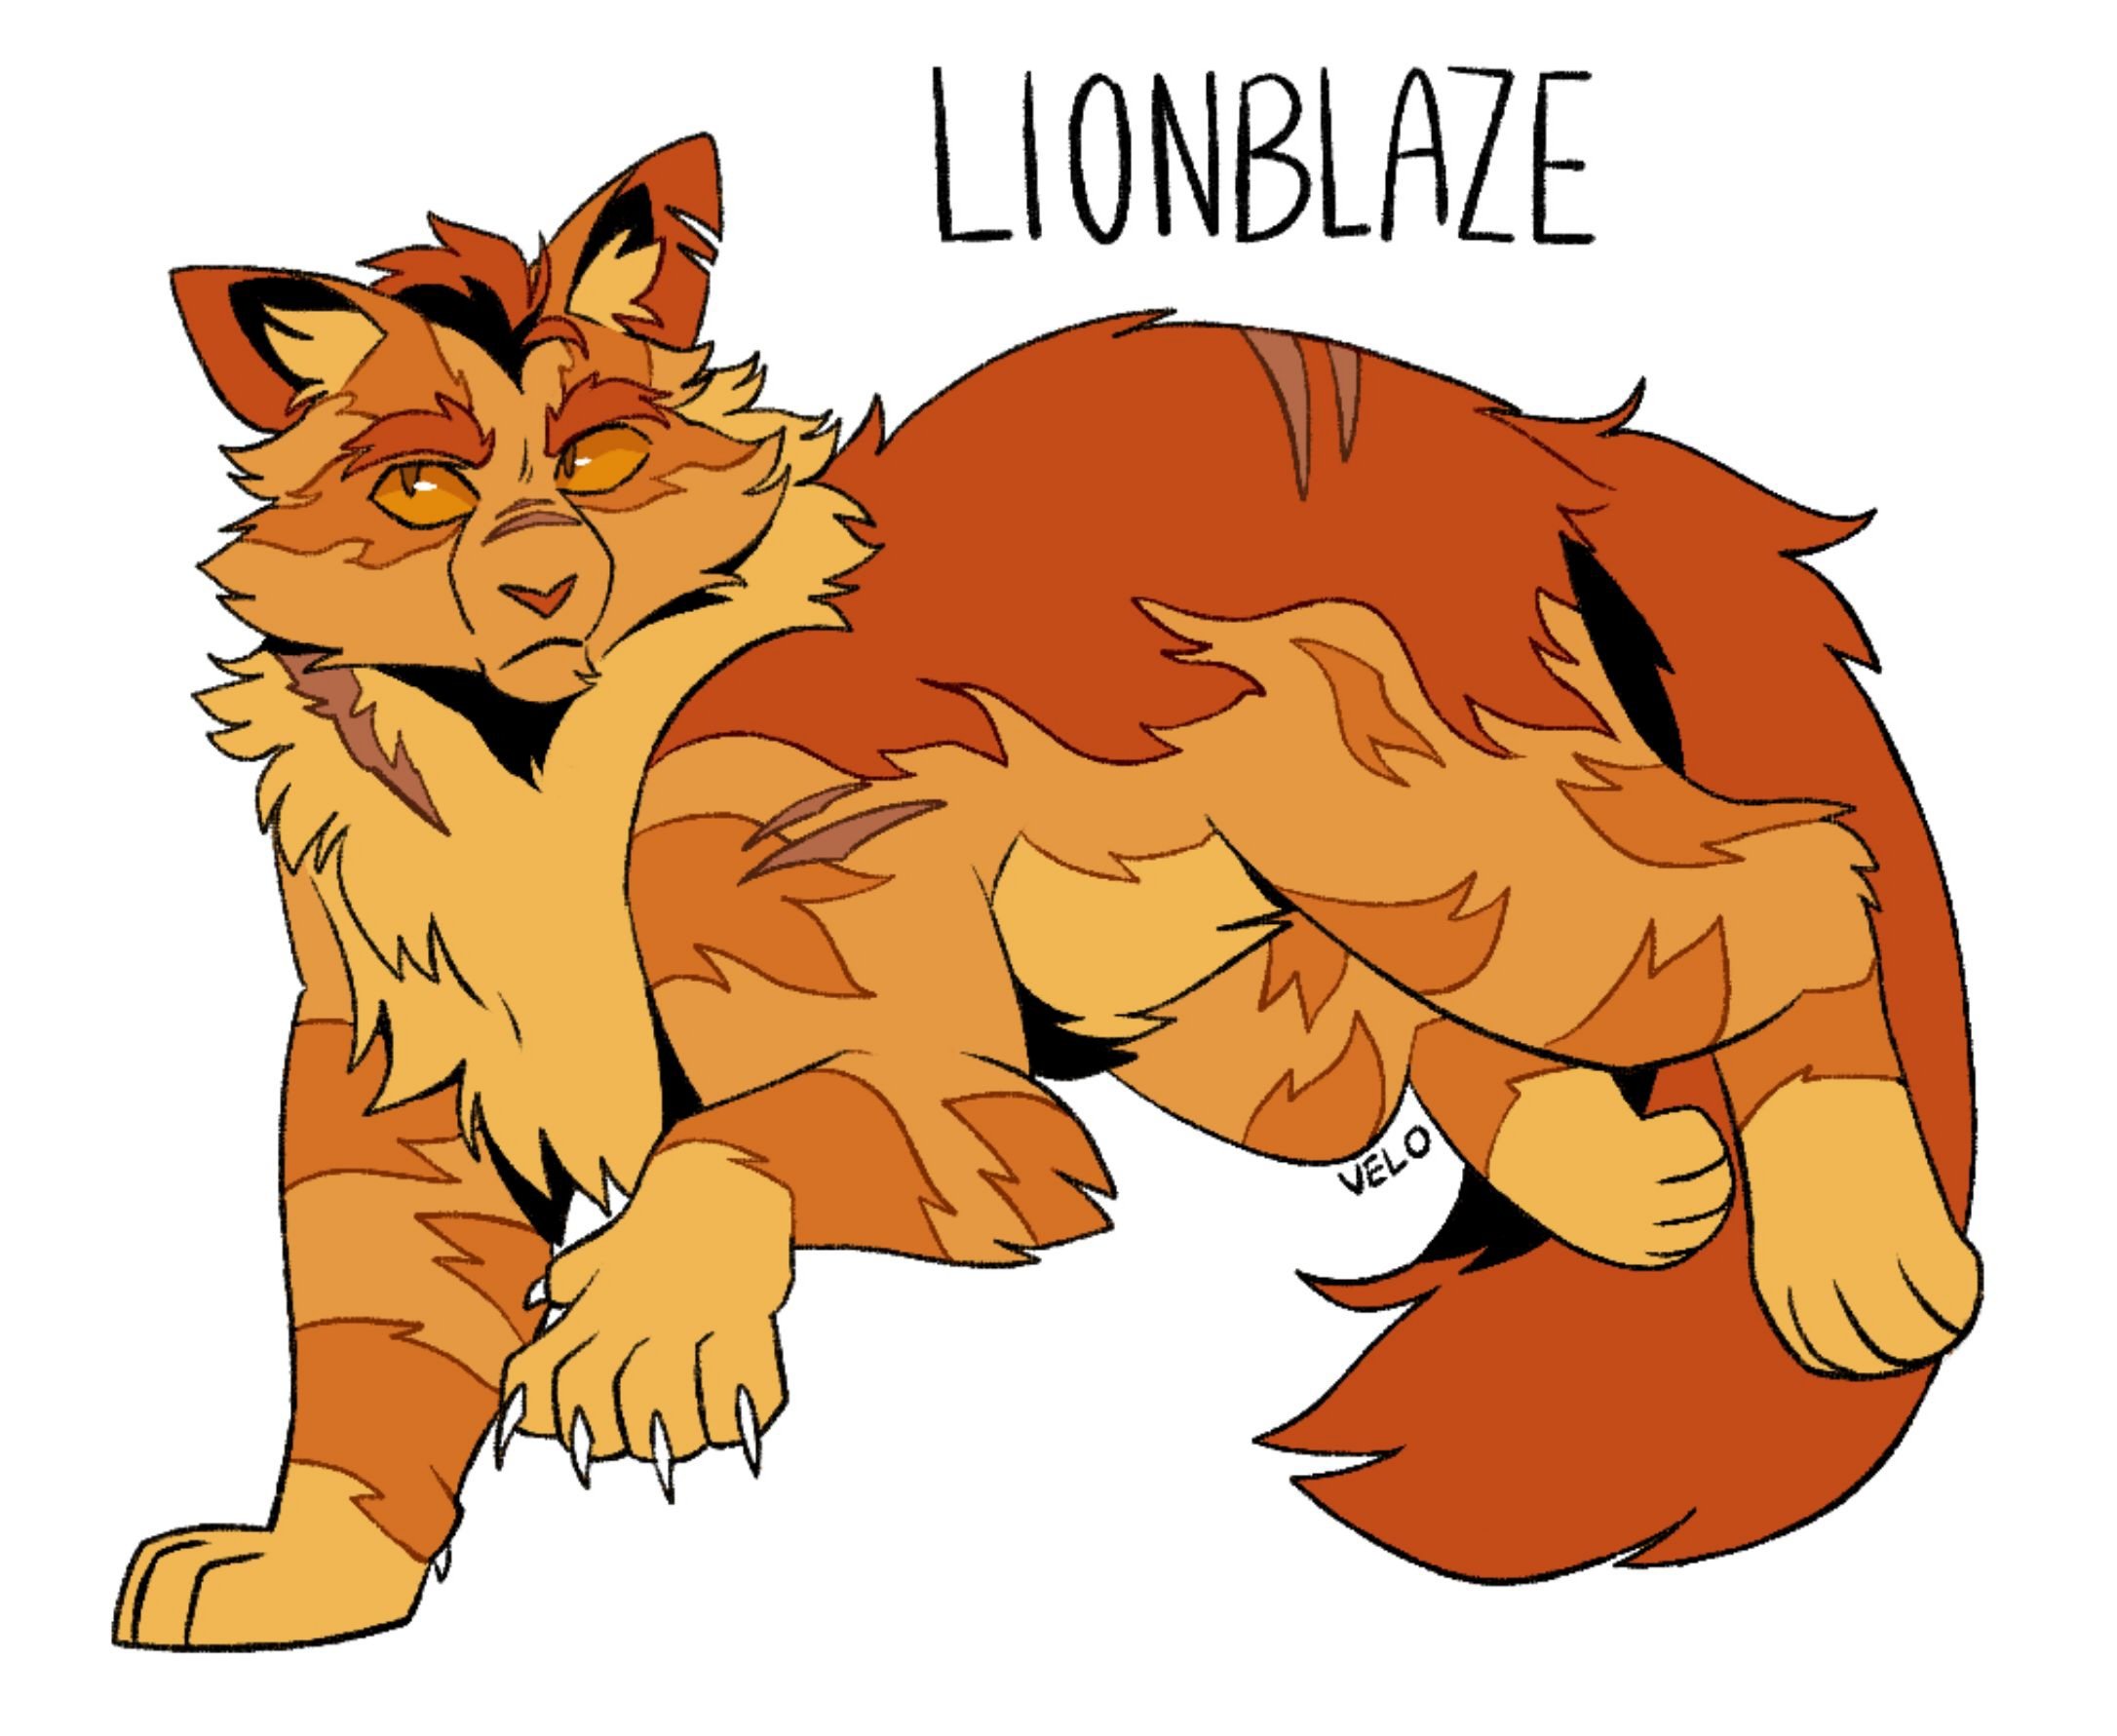 Lionblaze and Russetfur